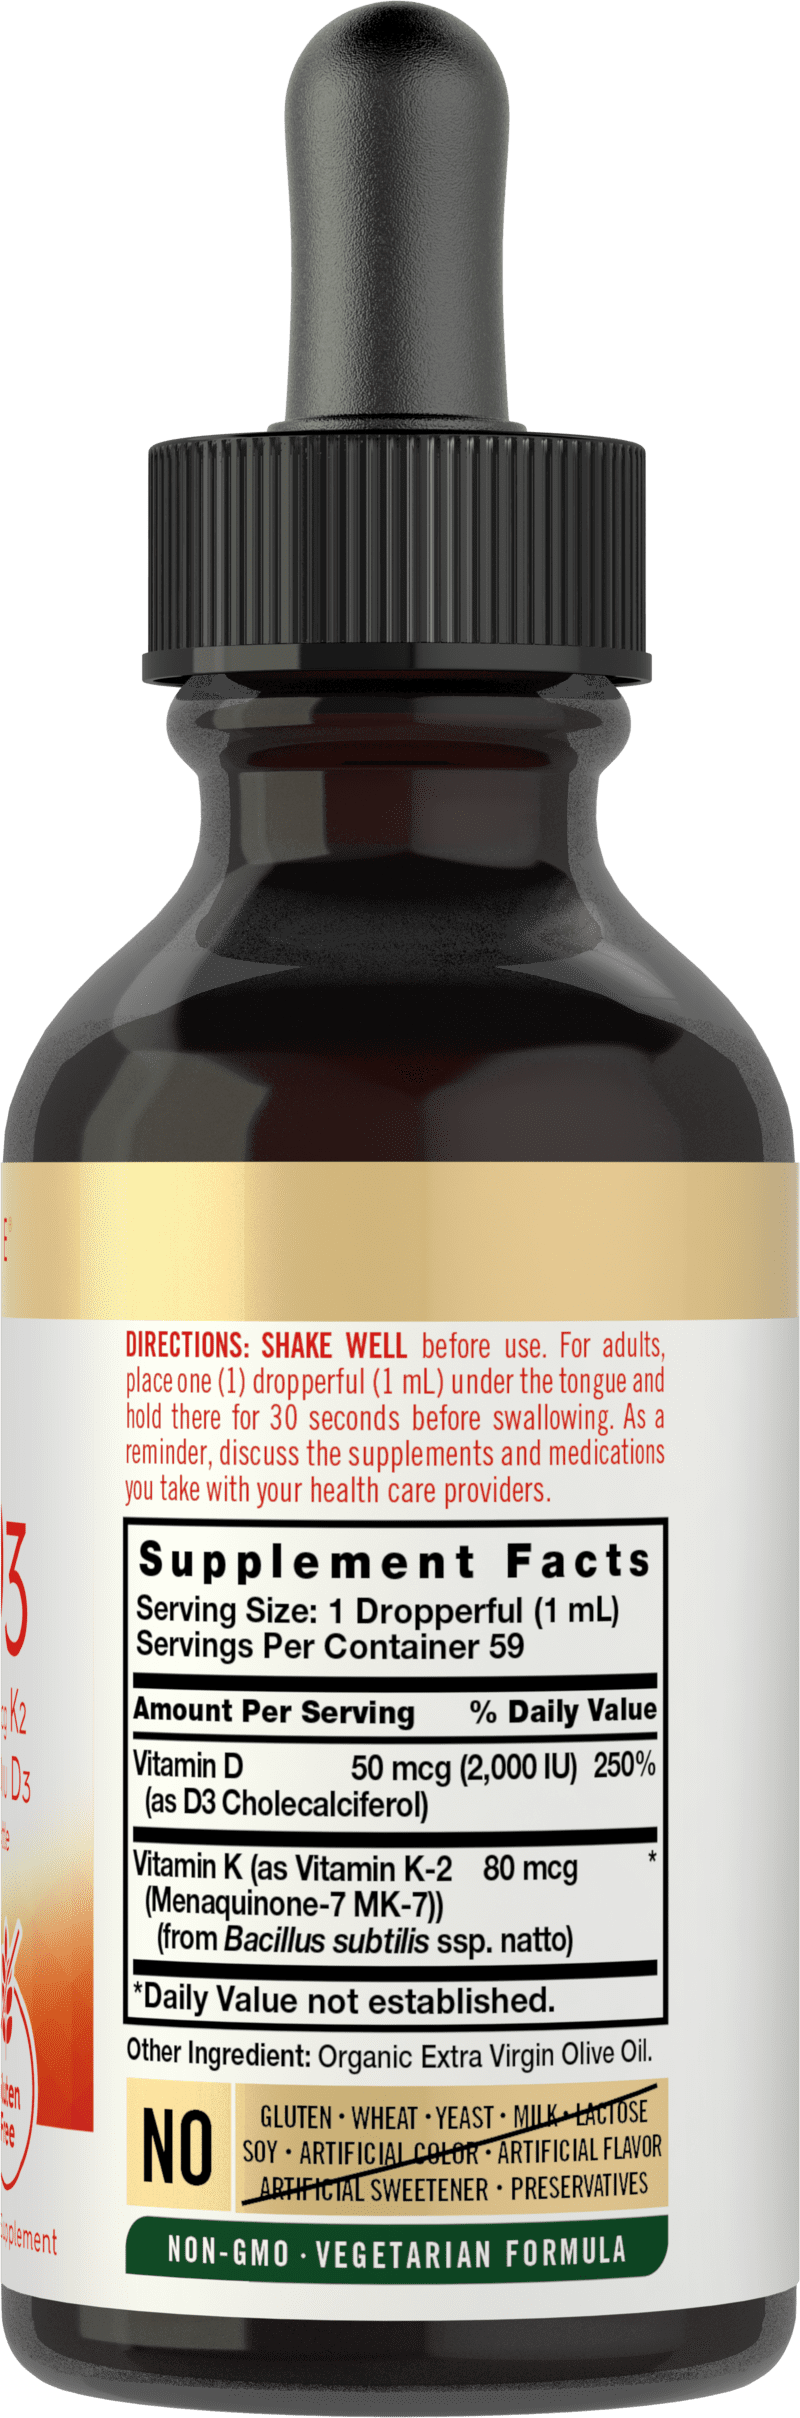 Vitamin K2 MK7 and D3 Liquid Drops | 2 Fl Oz | Vegetarian Supplement | by Carlyle